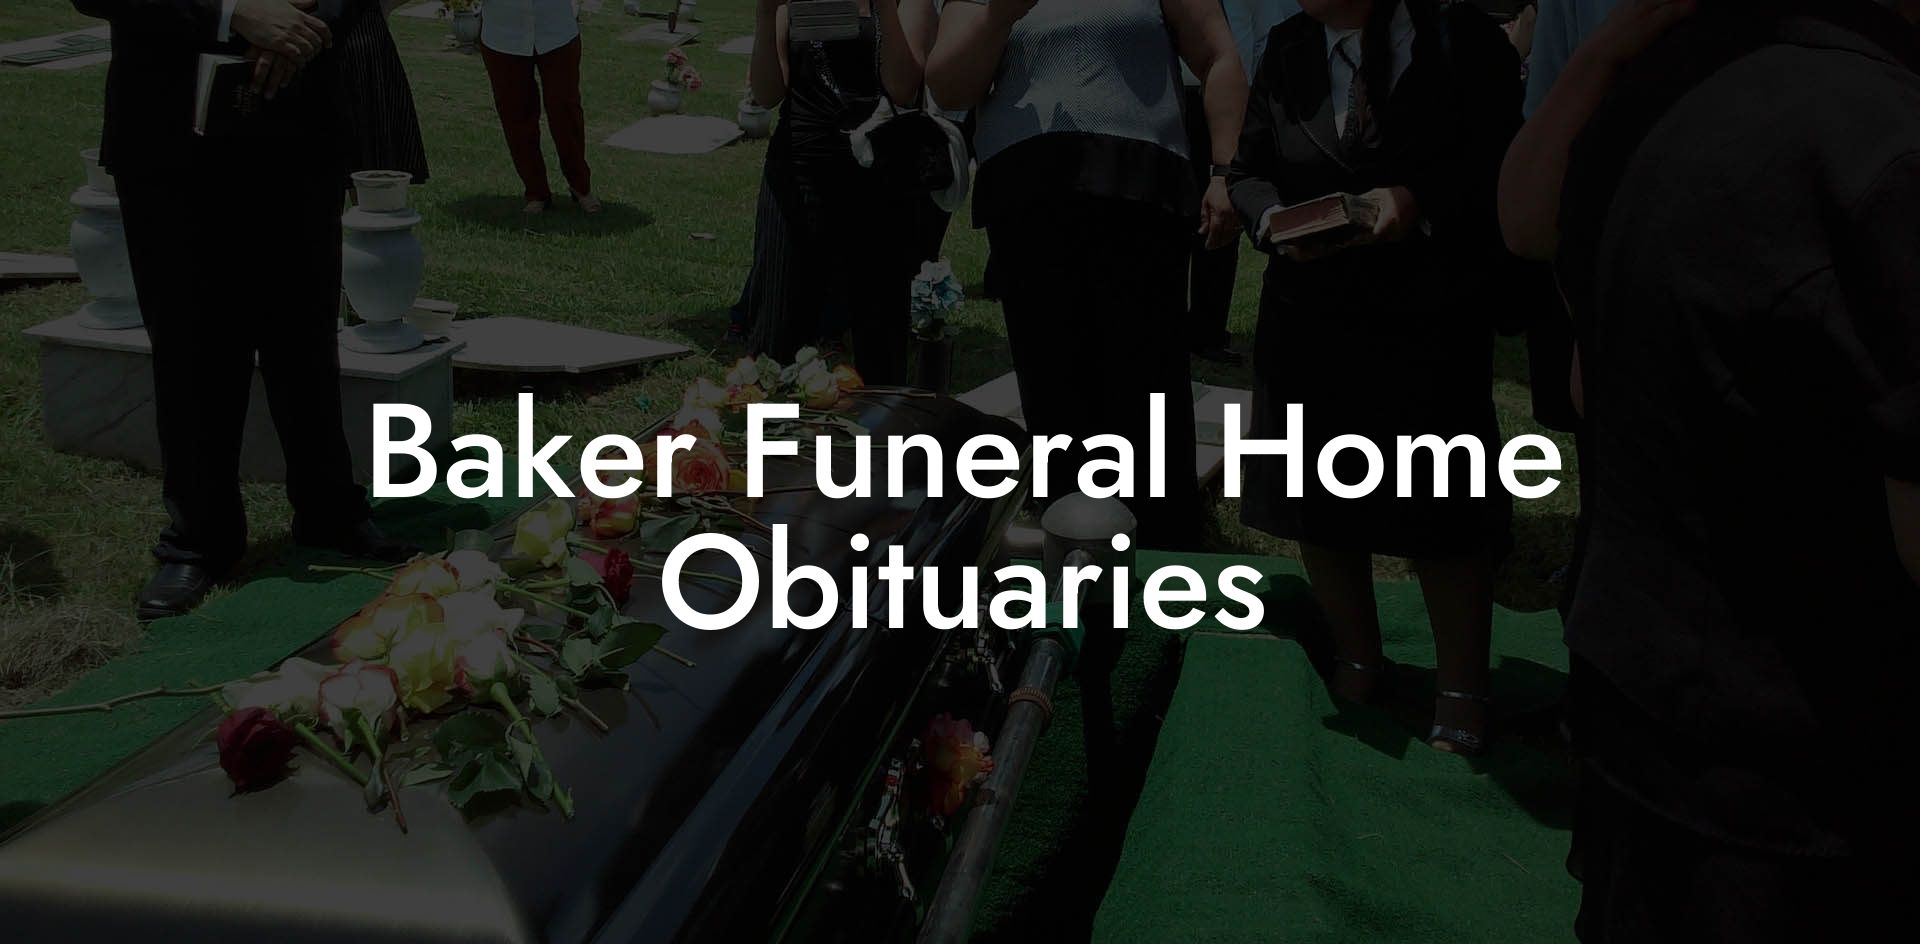 Baker Funeral Home Obituaries